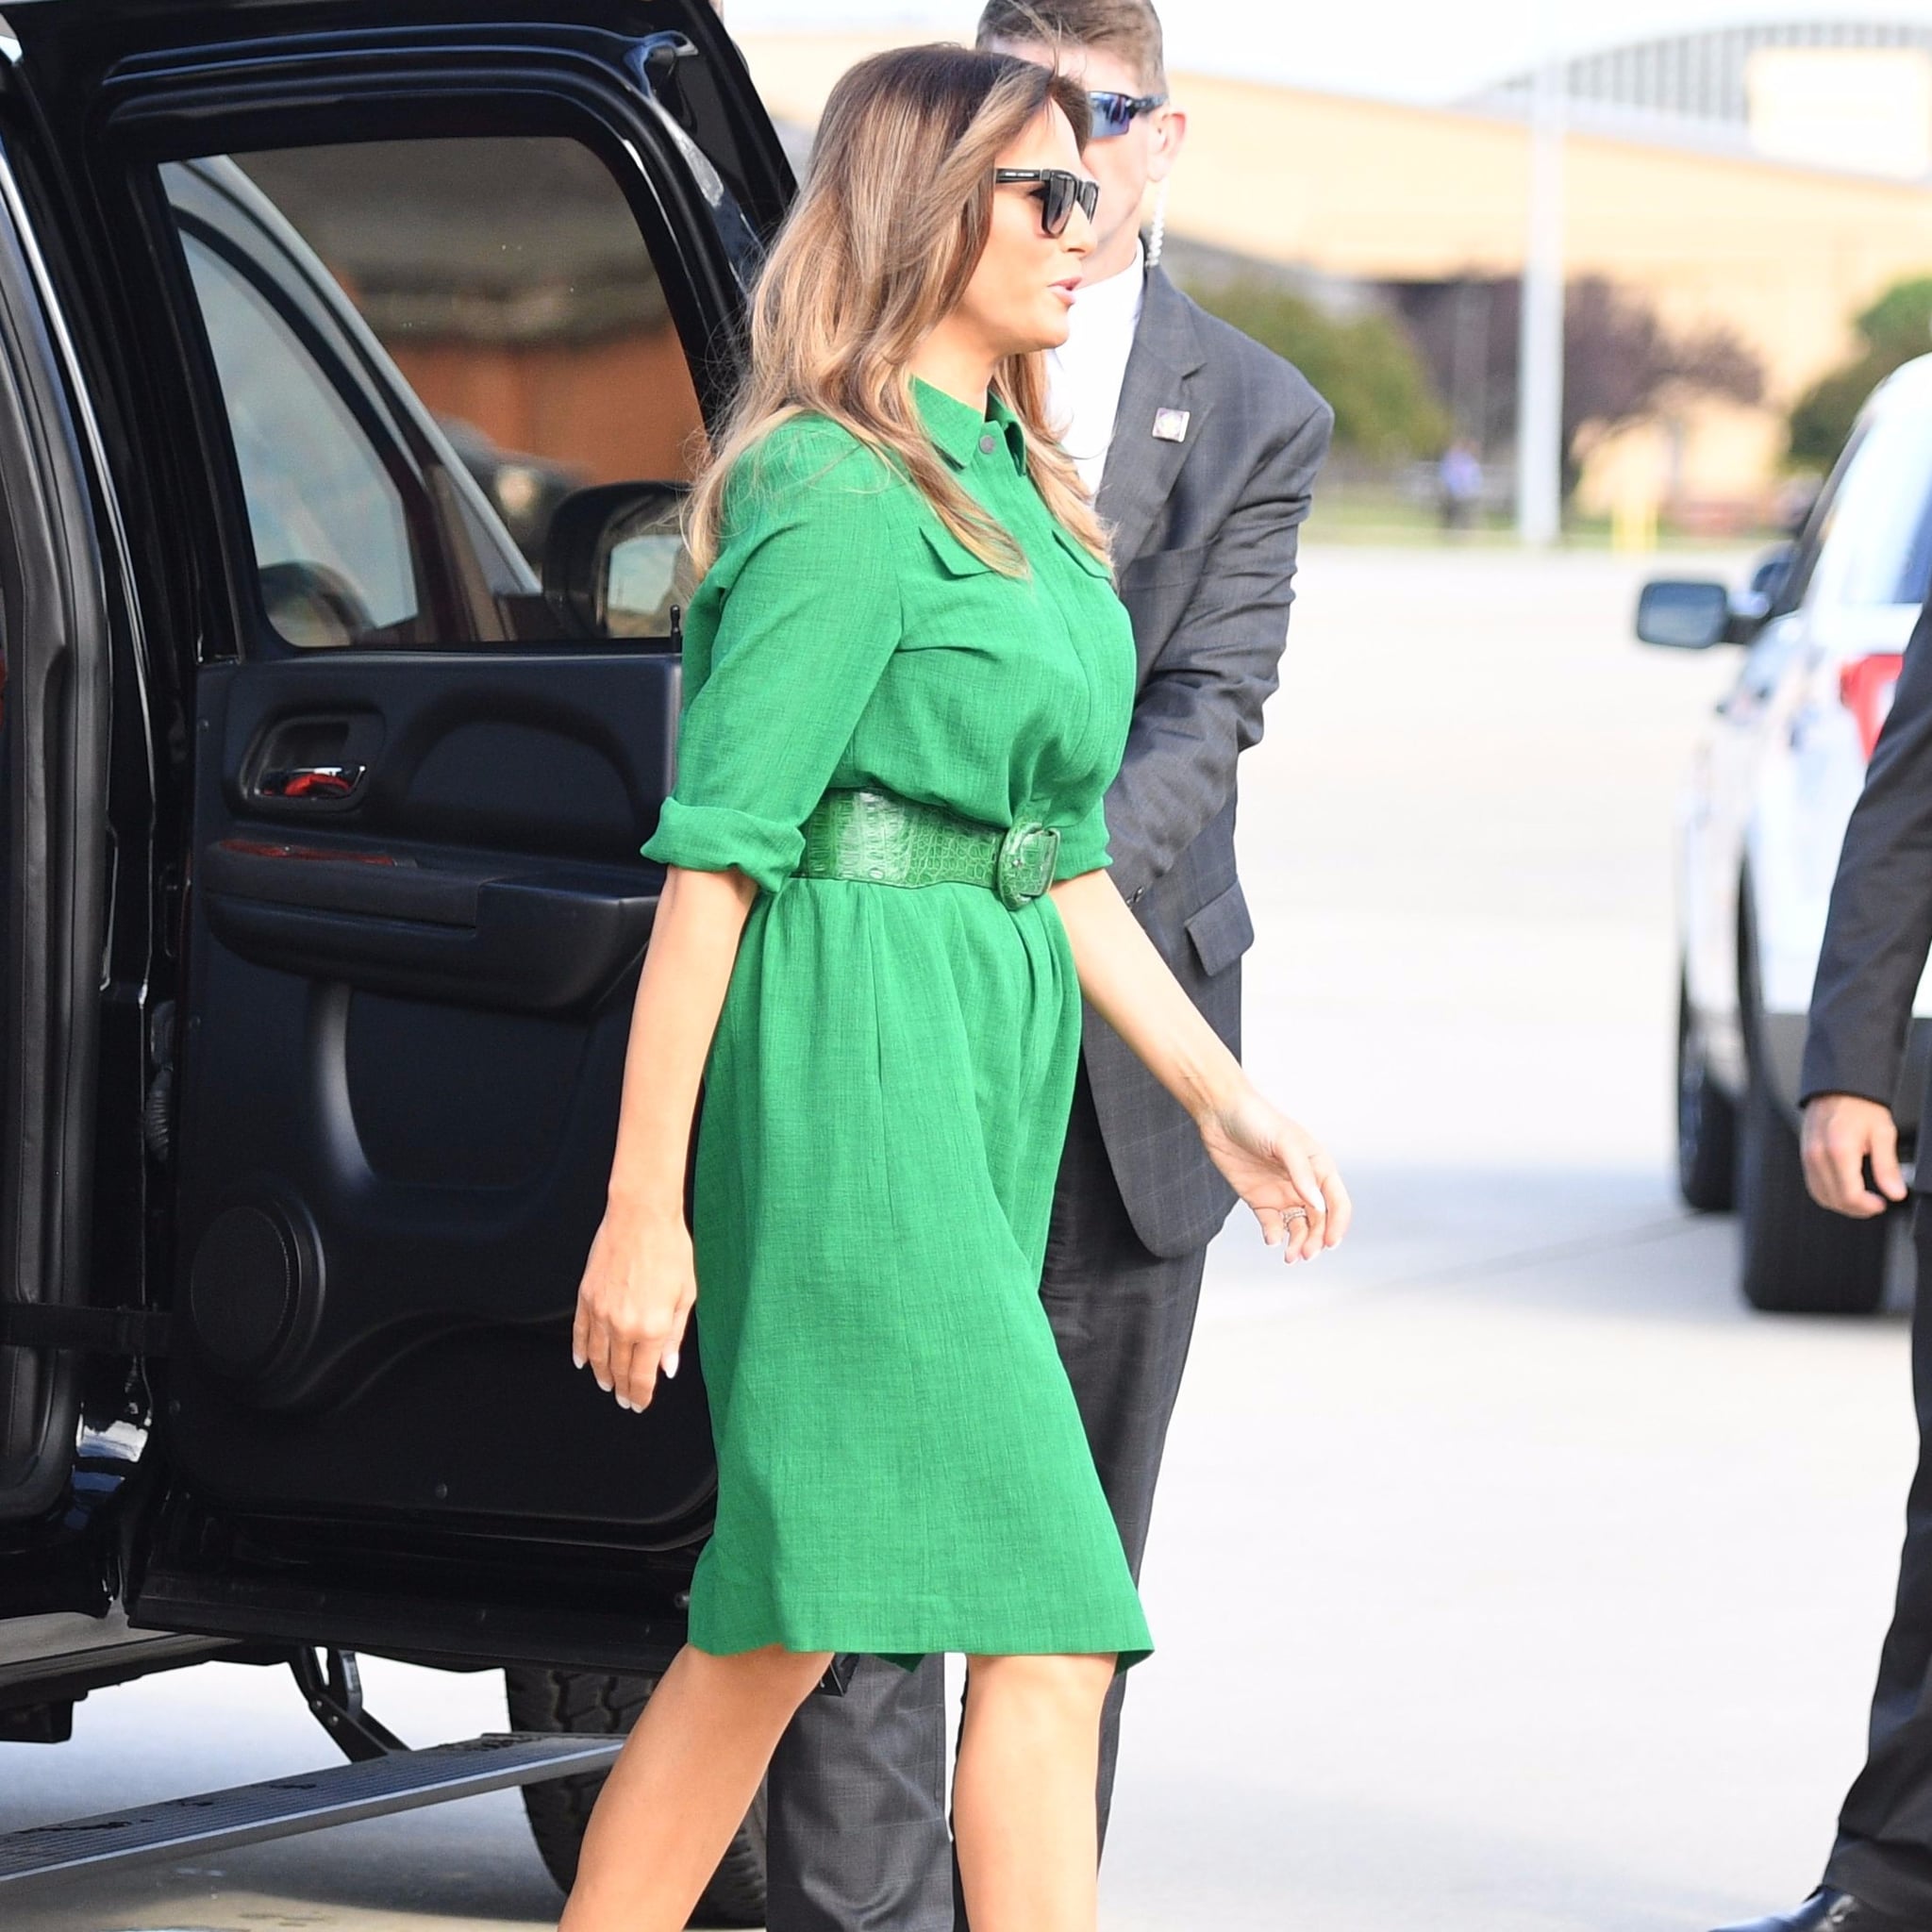 tolv Awakening Sammenbrud Melania Trump's Green Dress and Christian Louboutin Heels | POPSUGAR Fashion